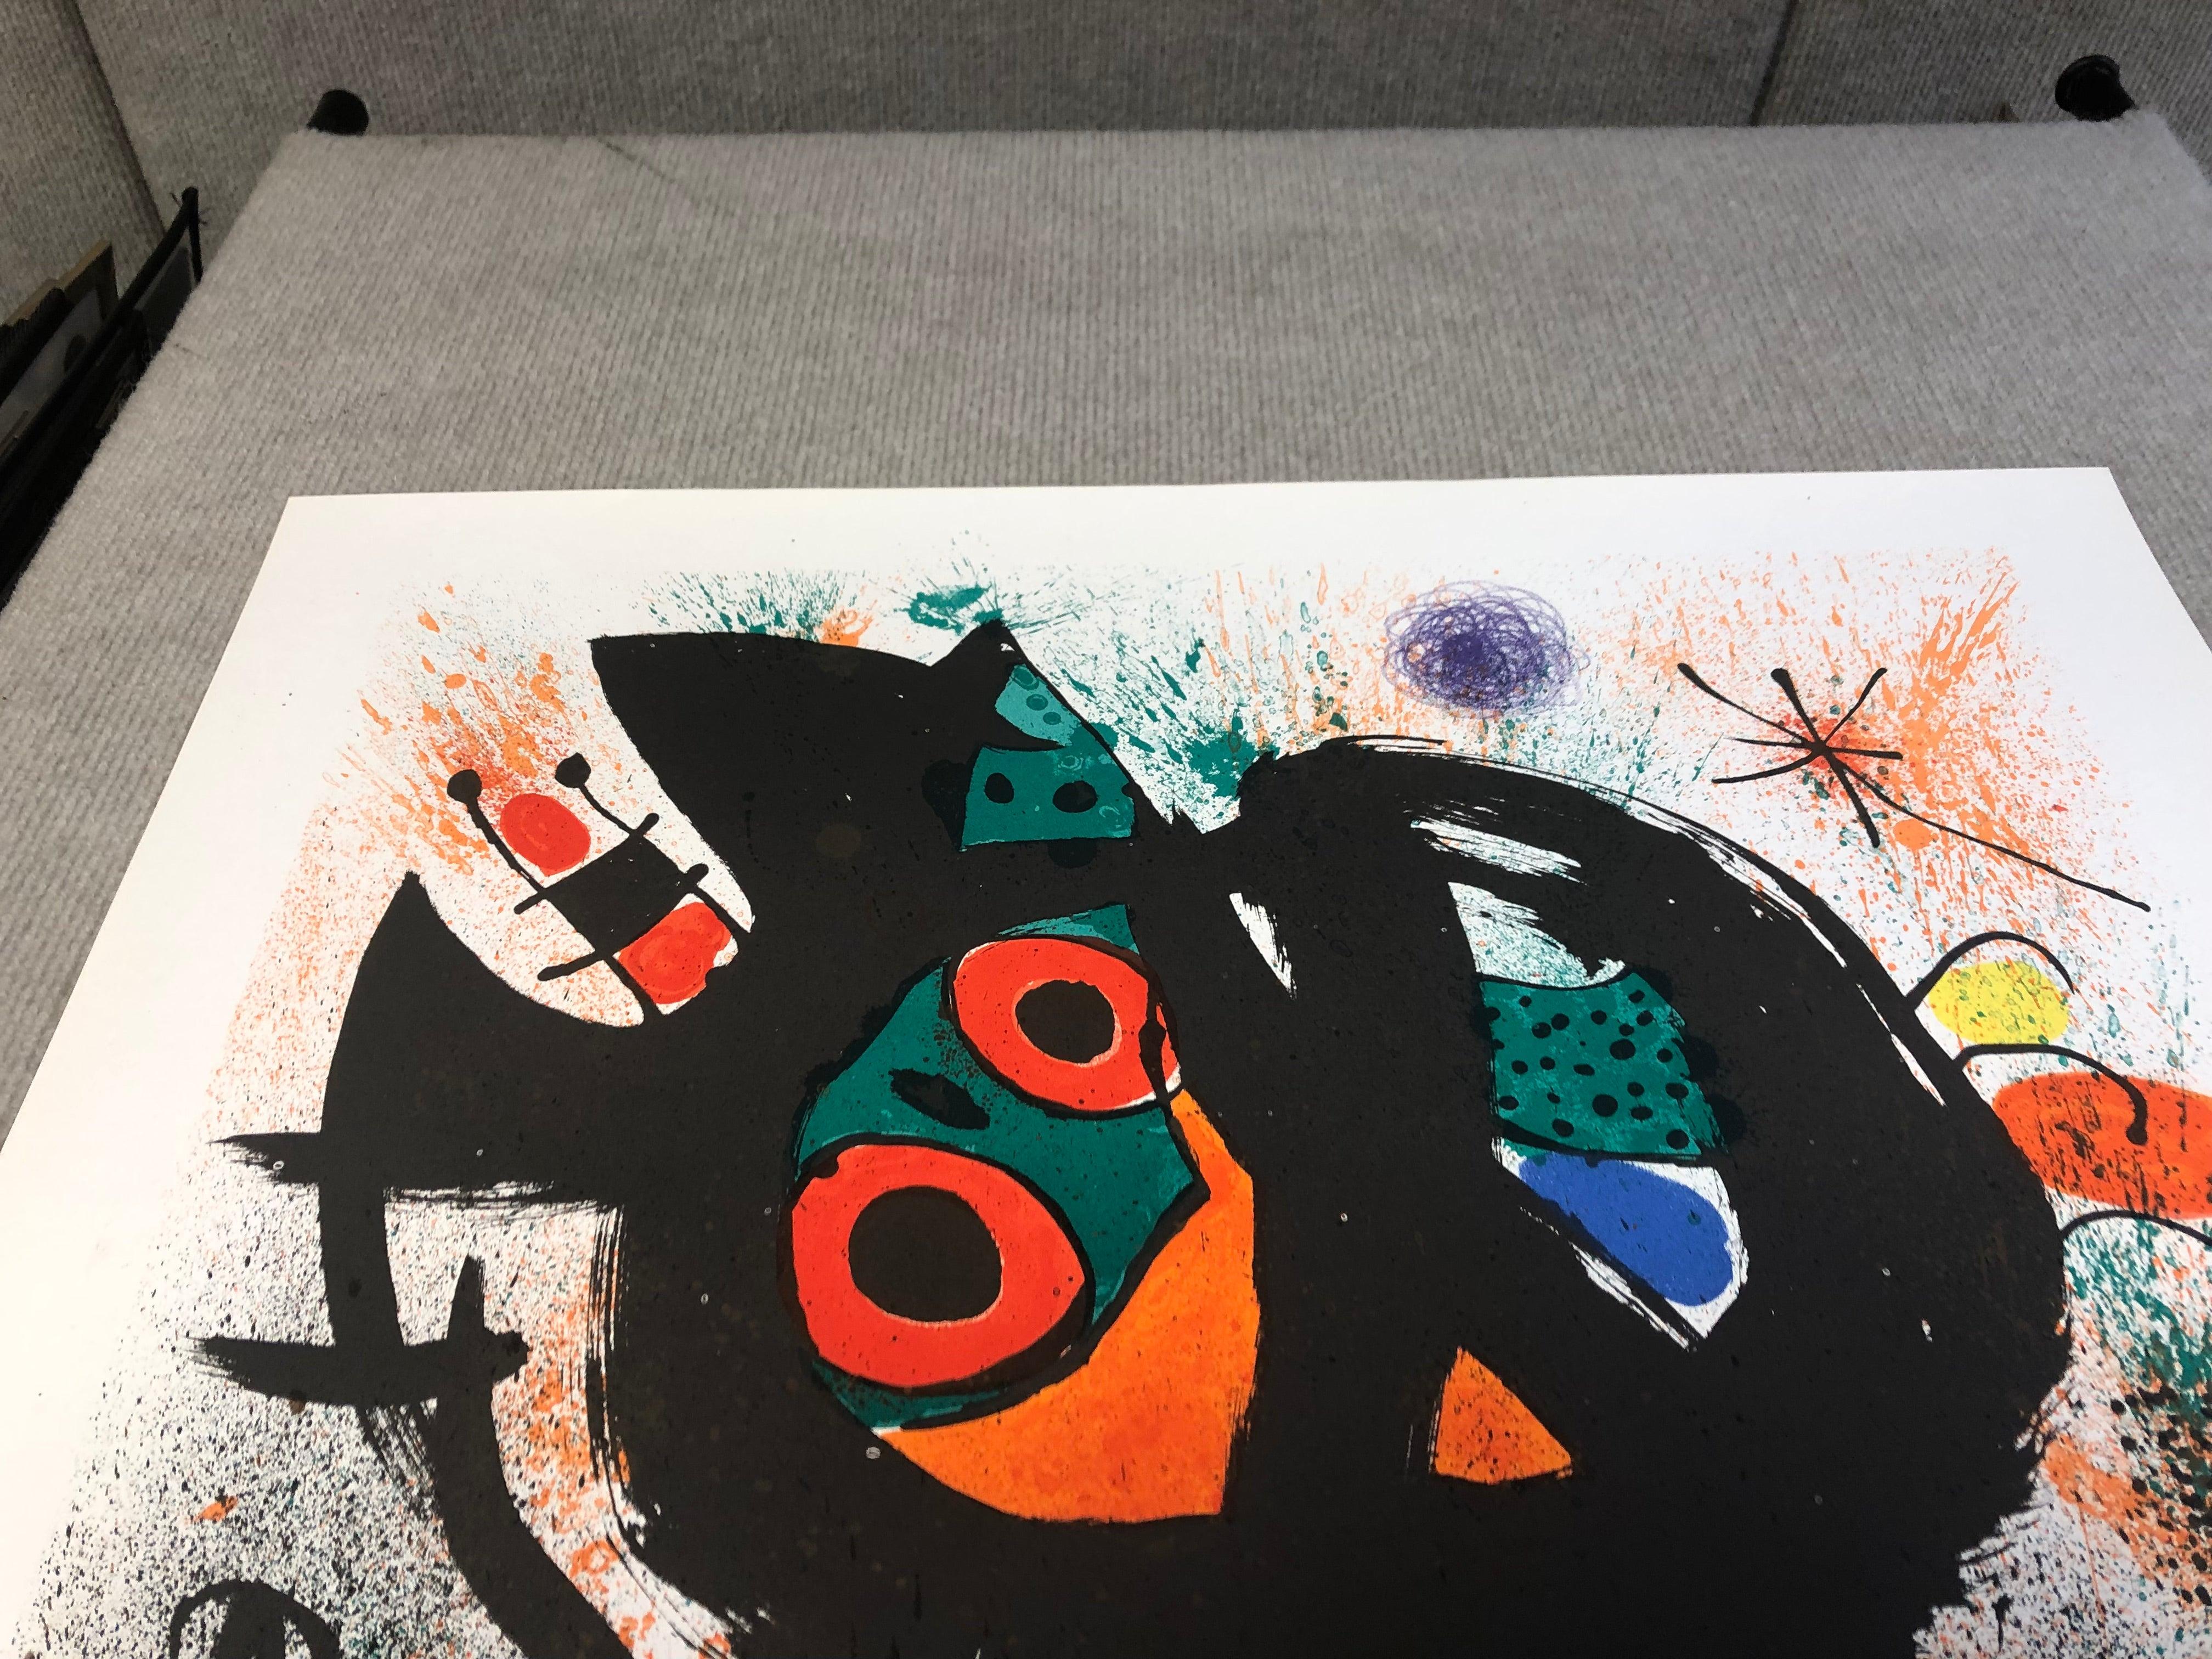 Joan Miro 'Pasadena Art Museum Exhibition' 1969- Original Poster - Print by Joan Miró